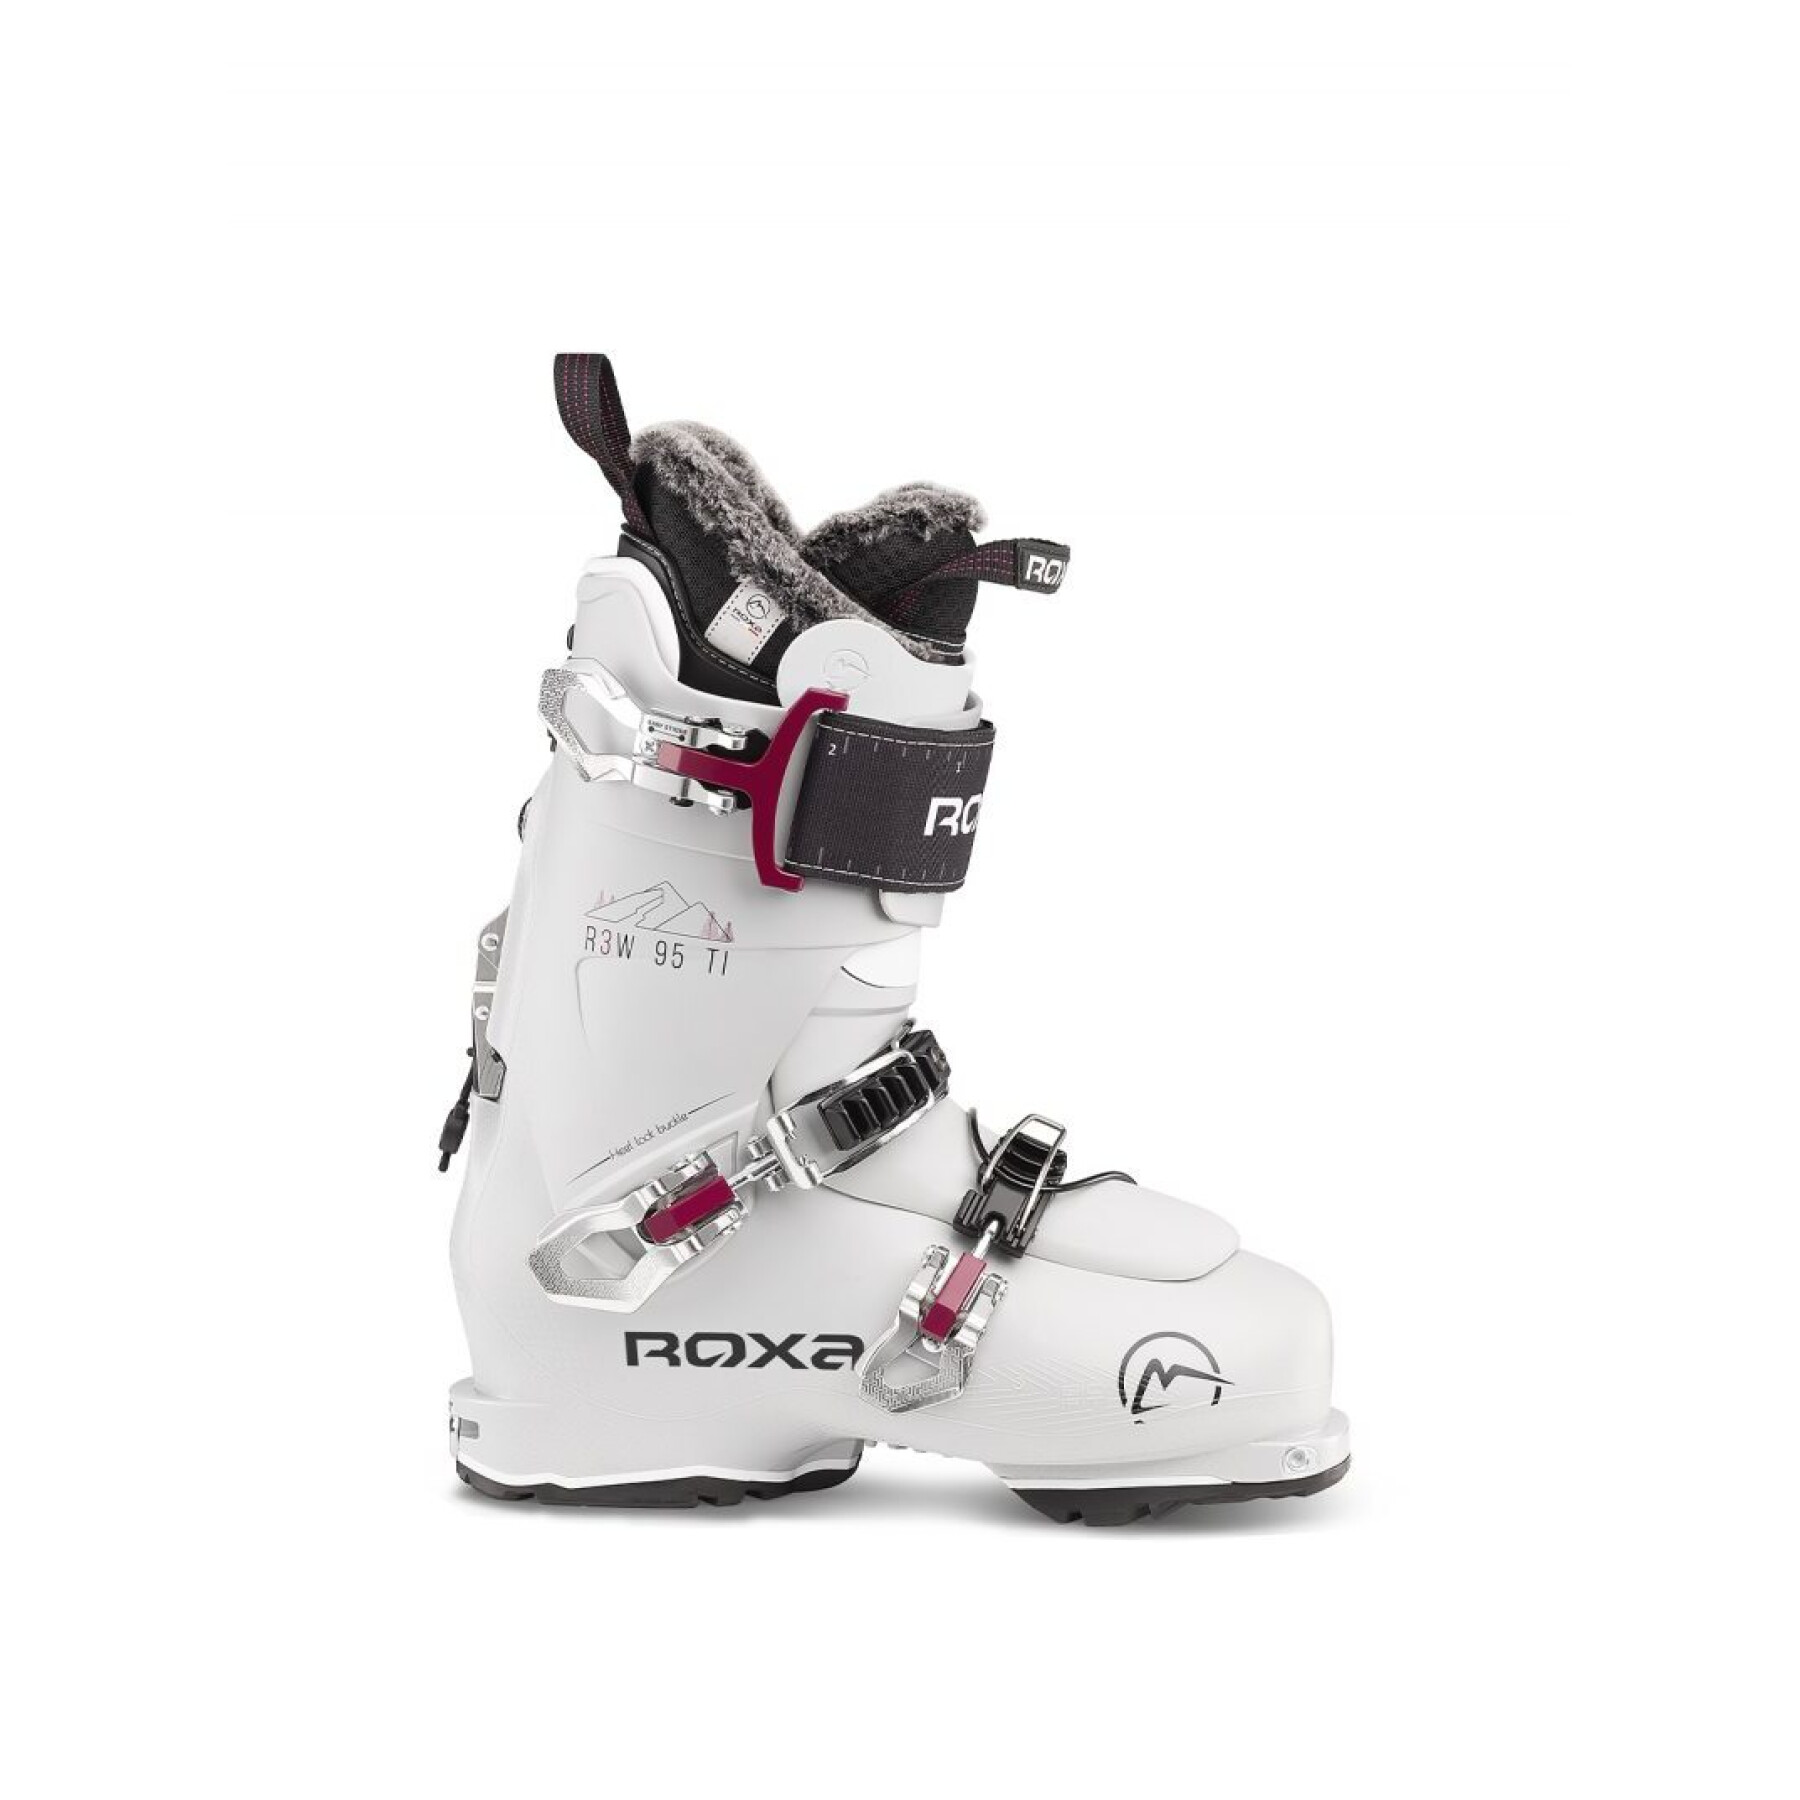 Women's r3w 95 ti ski boots Roxa